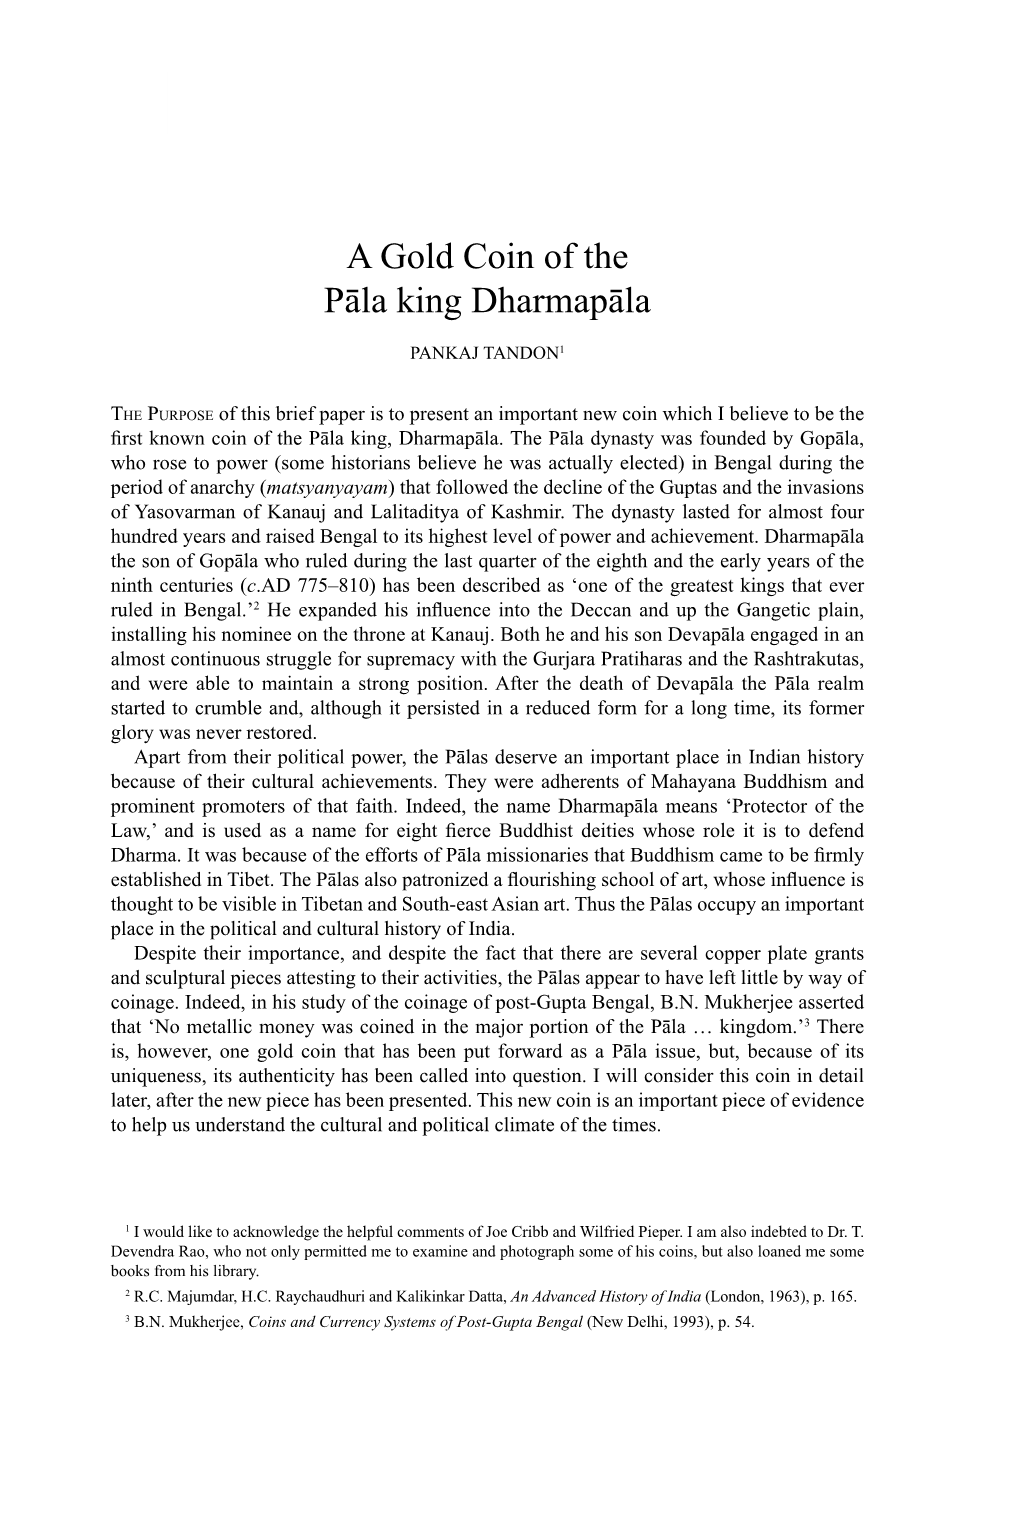 A Gold Coin of the Pala King Dharmapala